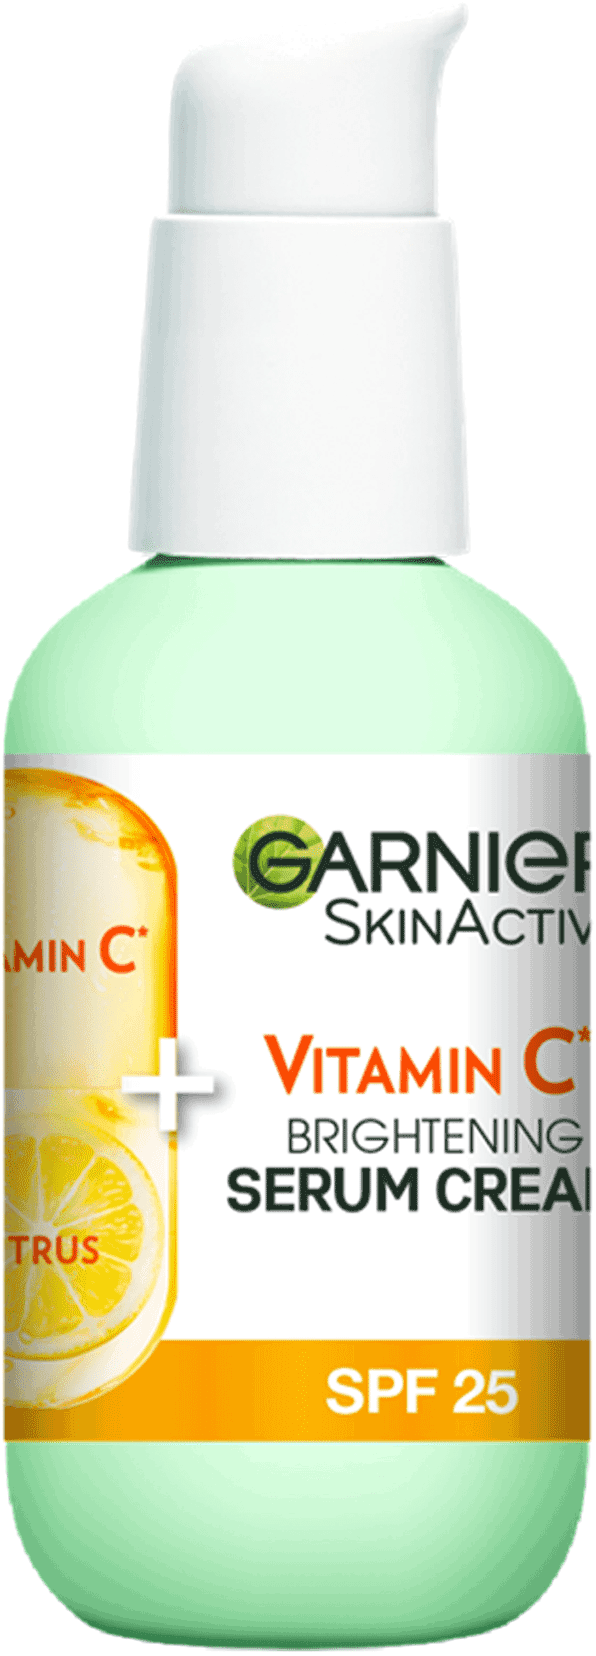 Vitamin C Brightening Serum with SPF 25